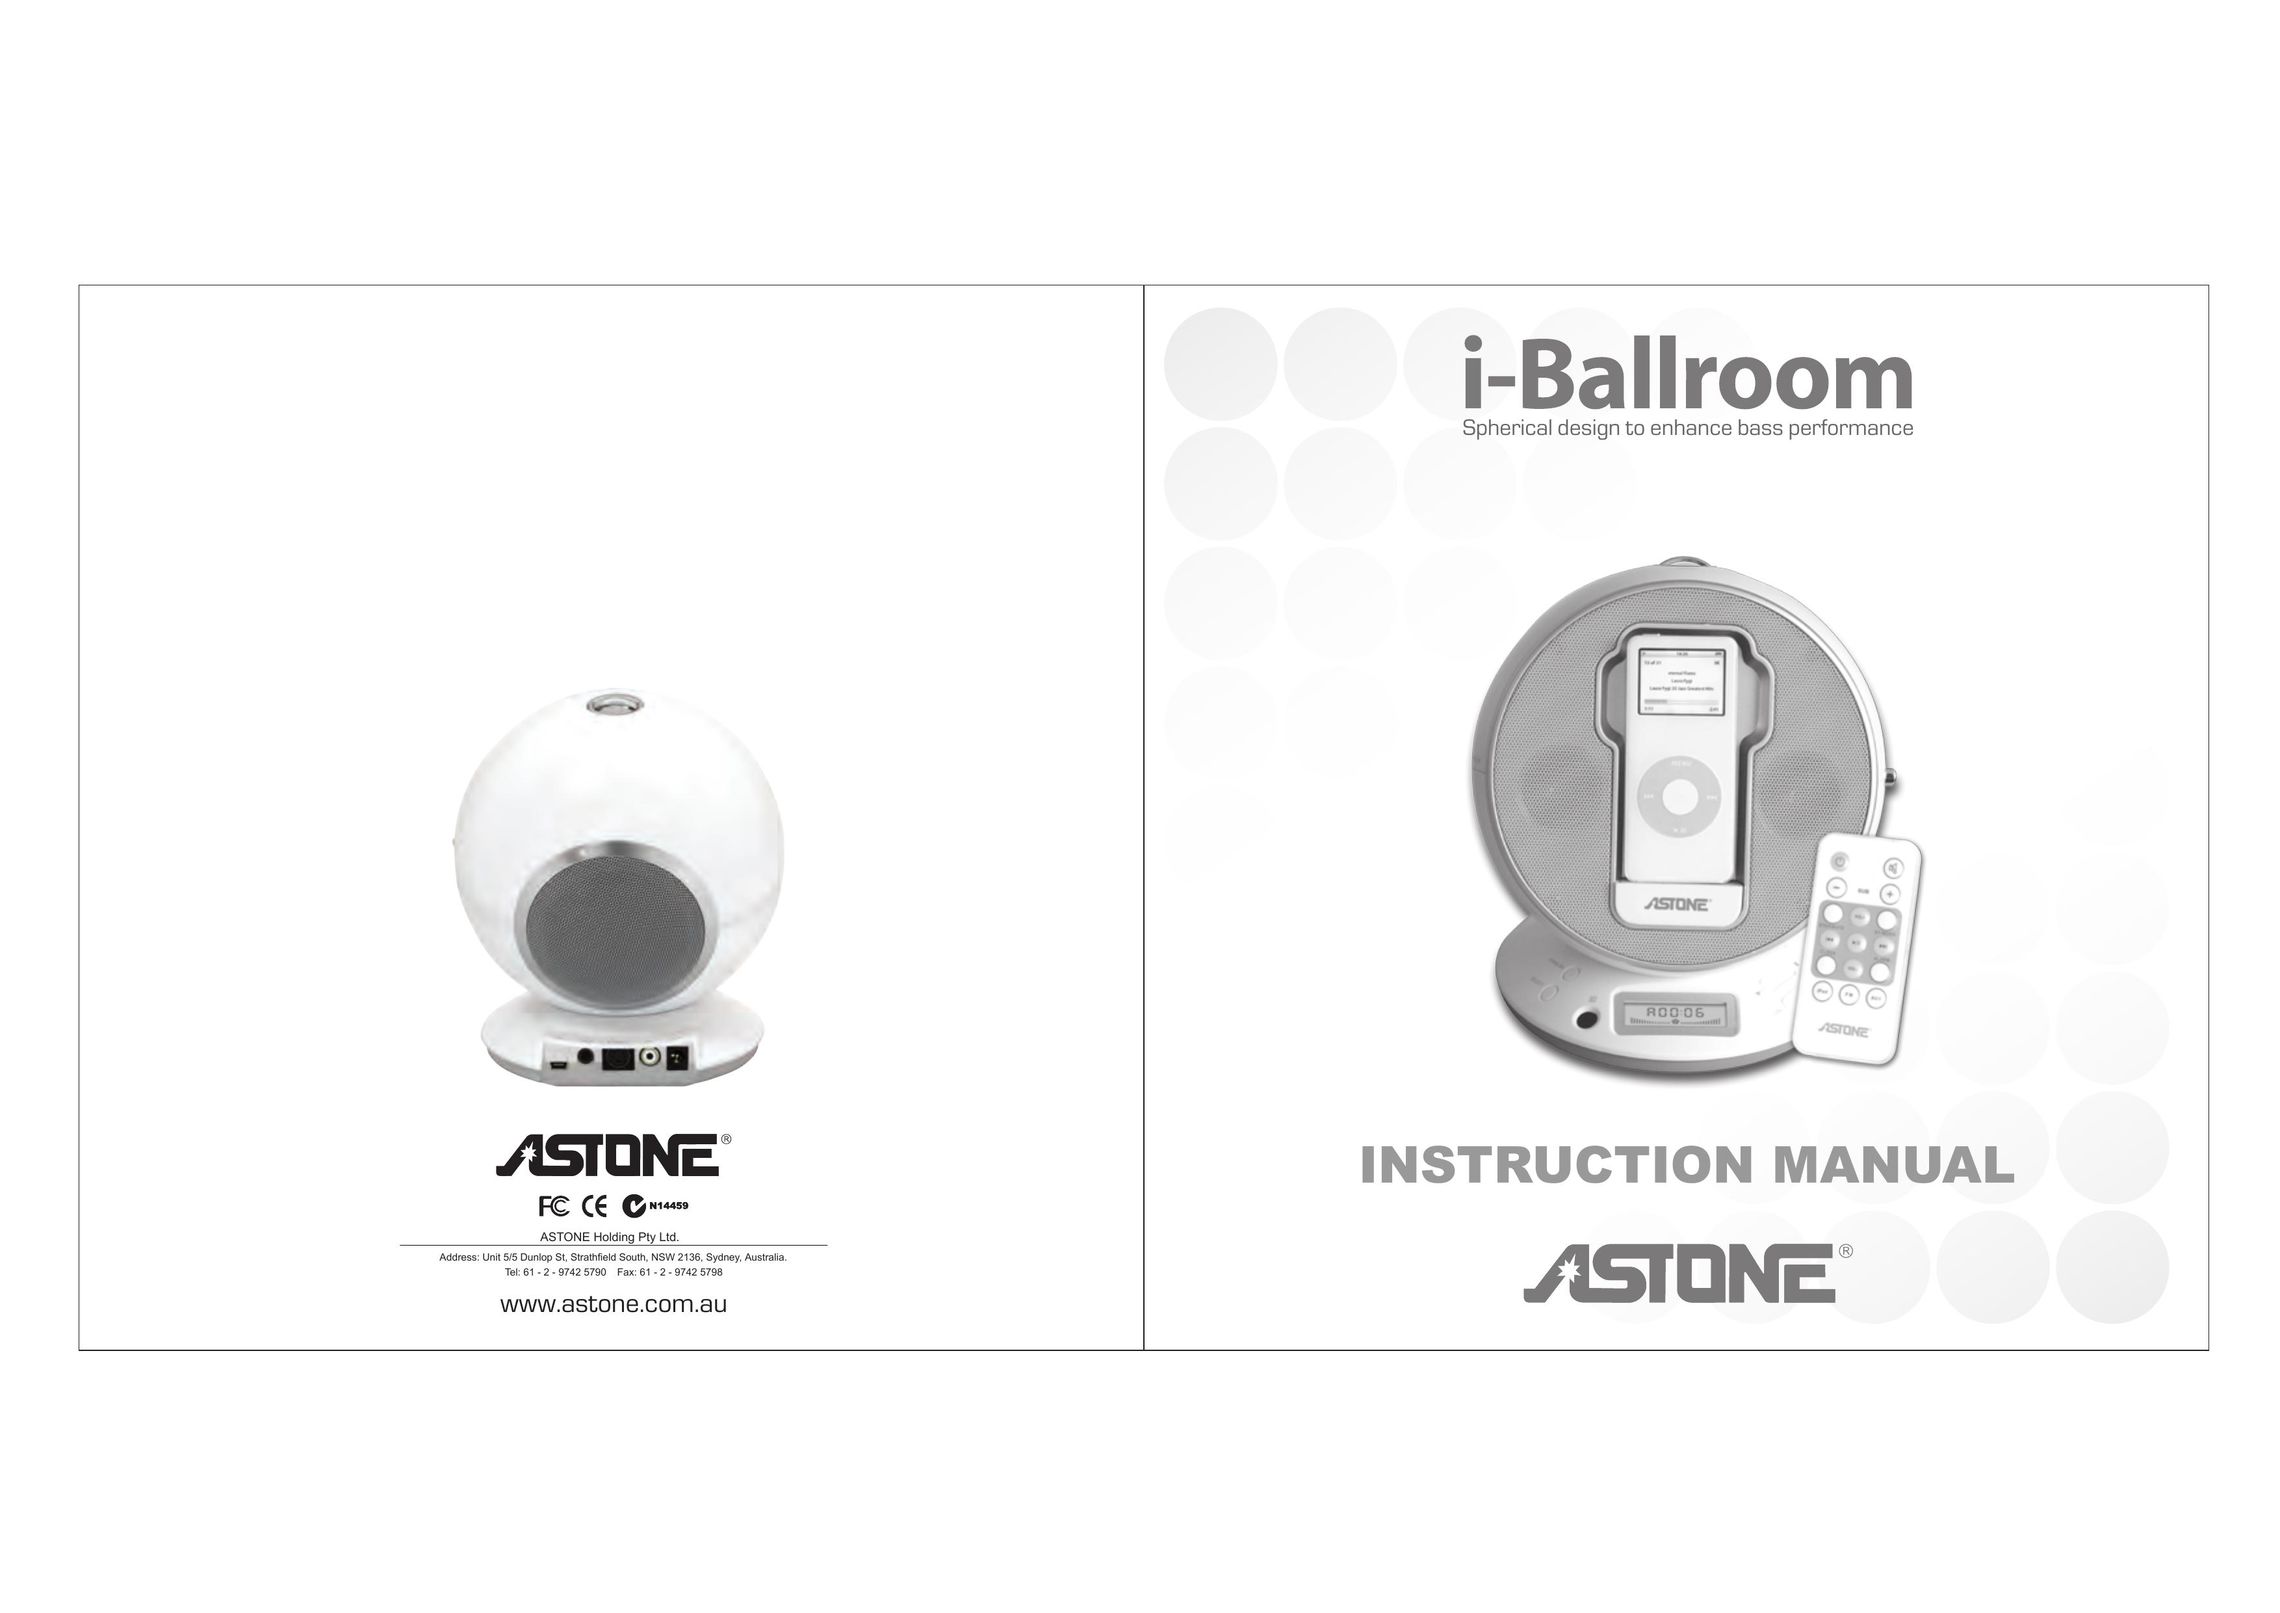 Astone Holdings Pty high quality speaker system Portable Speaker User Manual